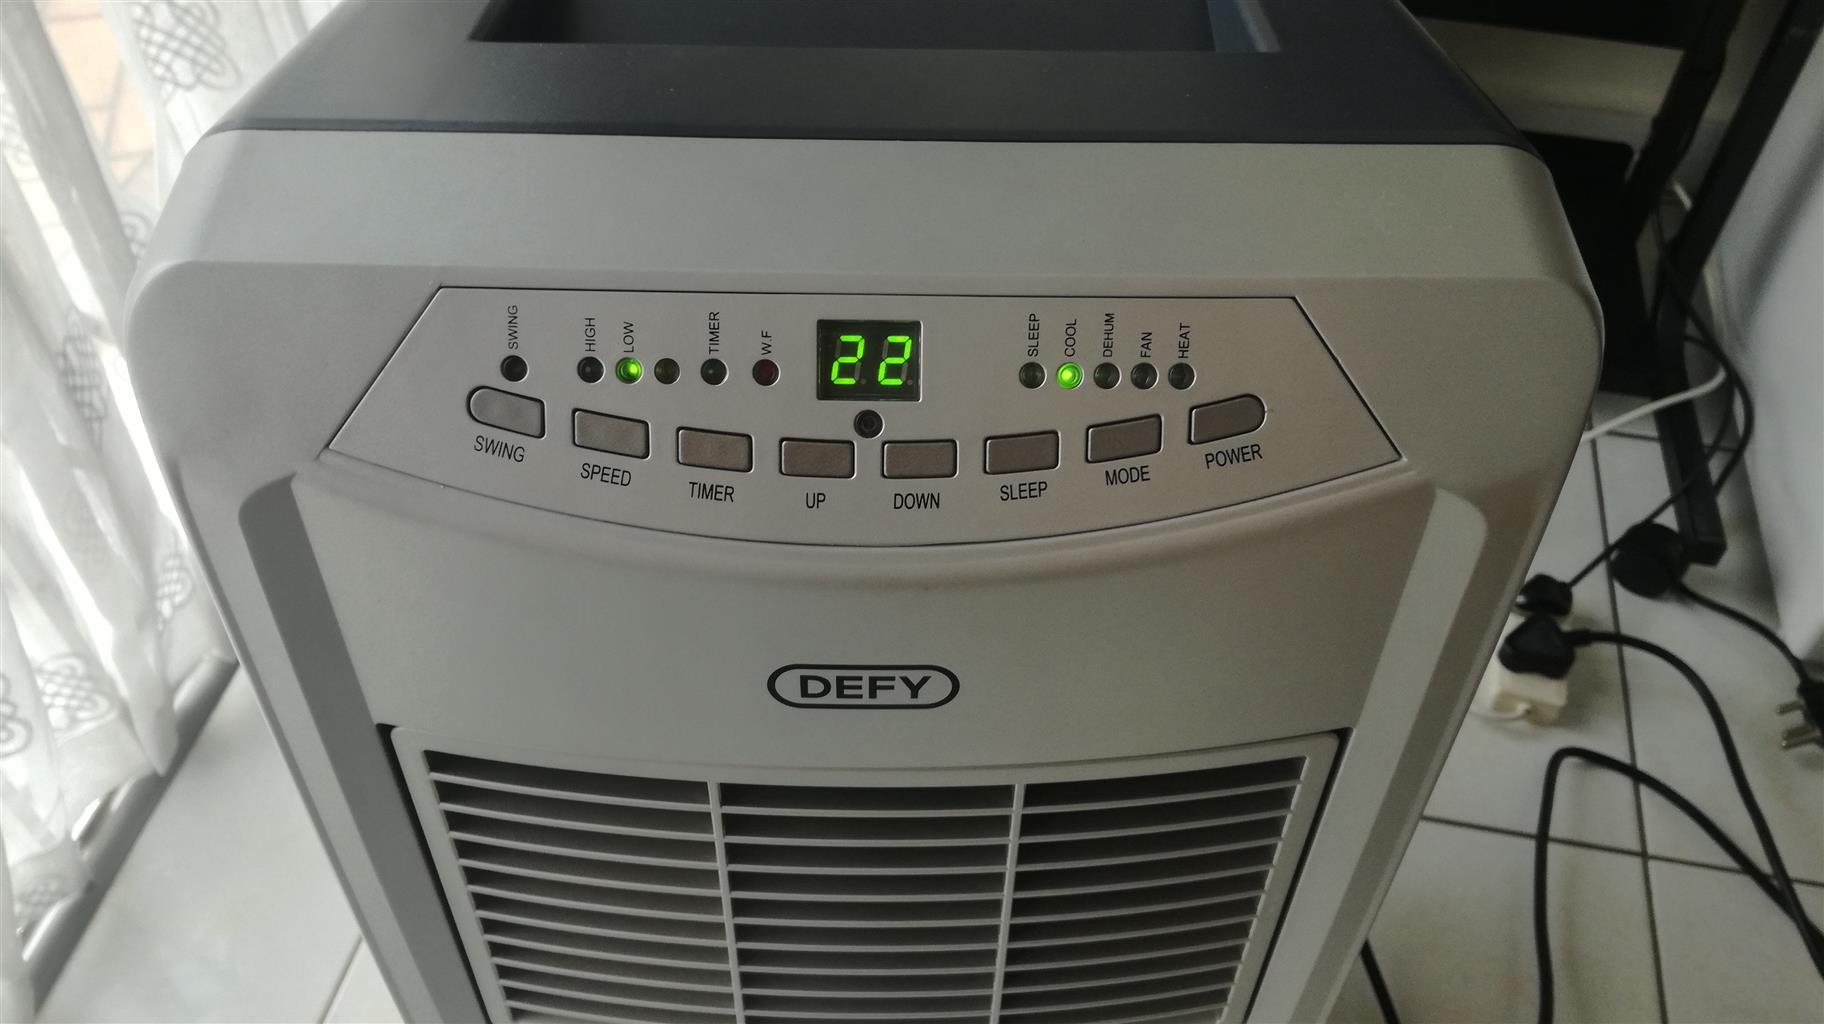 Defy Portable Air Conditioner 12000 BTU/H